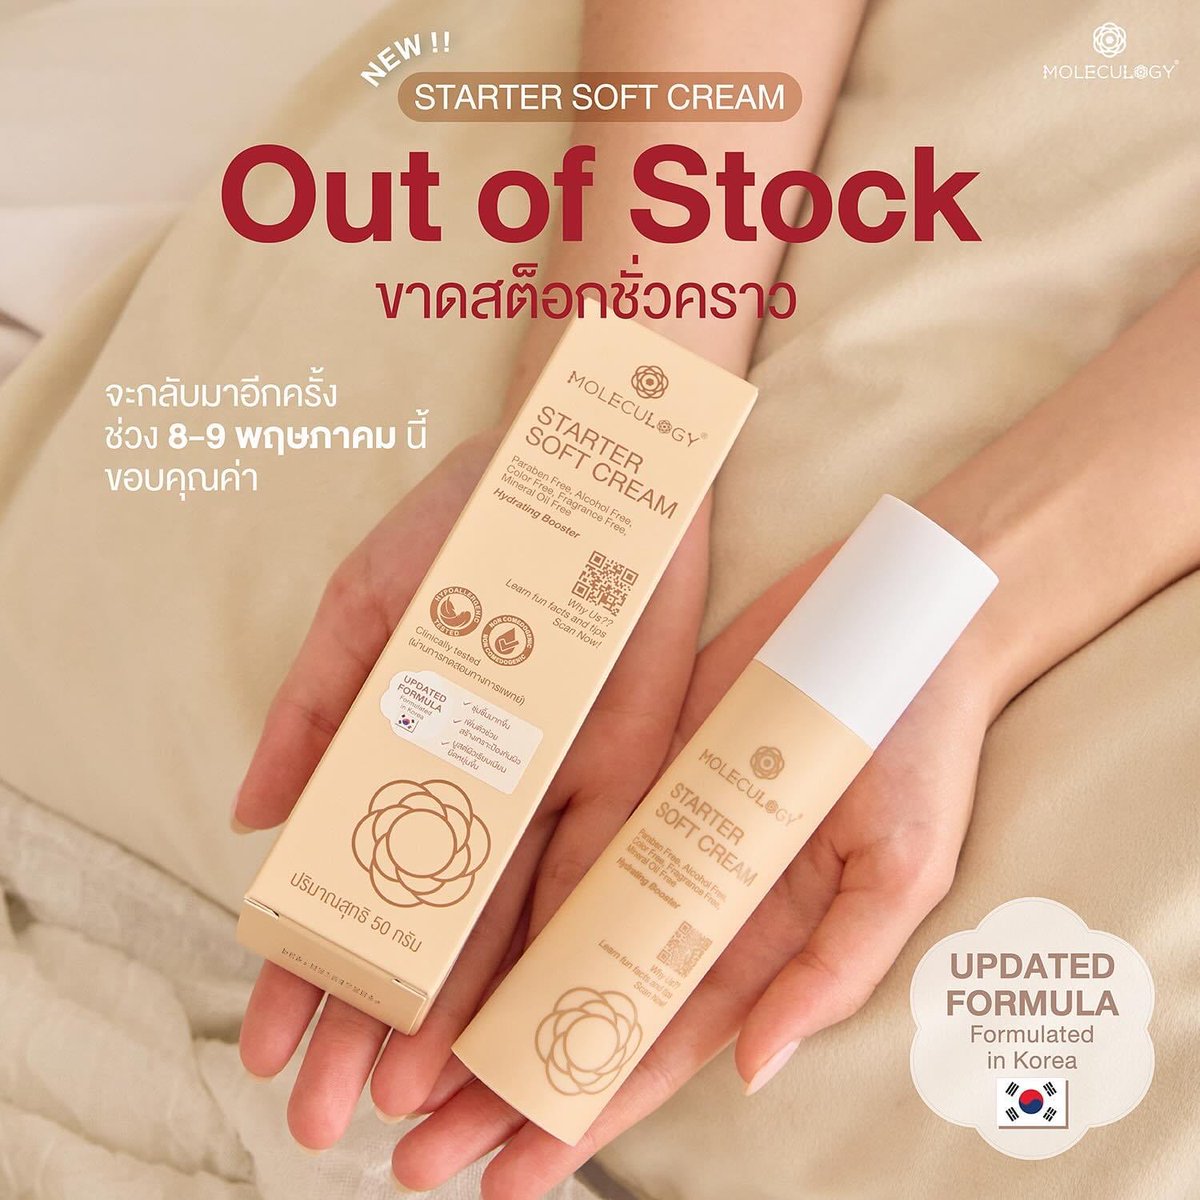 Starter Soft Cream ❌ Out of Stock ขาดสต็อกชั่วคราว จะกลับมาอีกครั้งช่วง 8-9 พฤษภาคม นี้ 🥰 #moleculogy